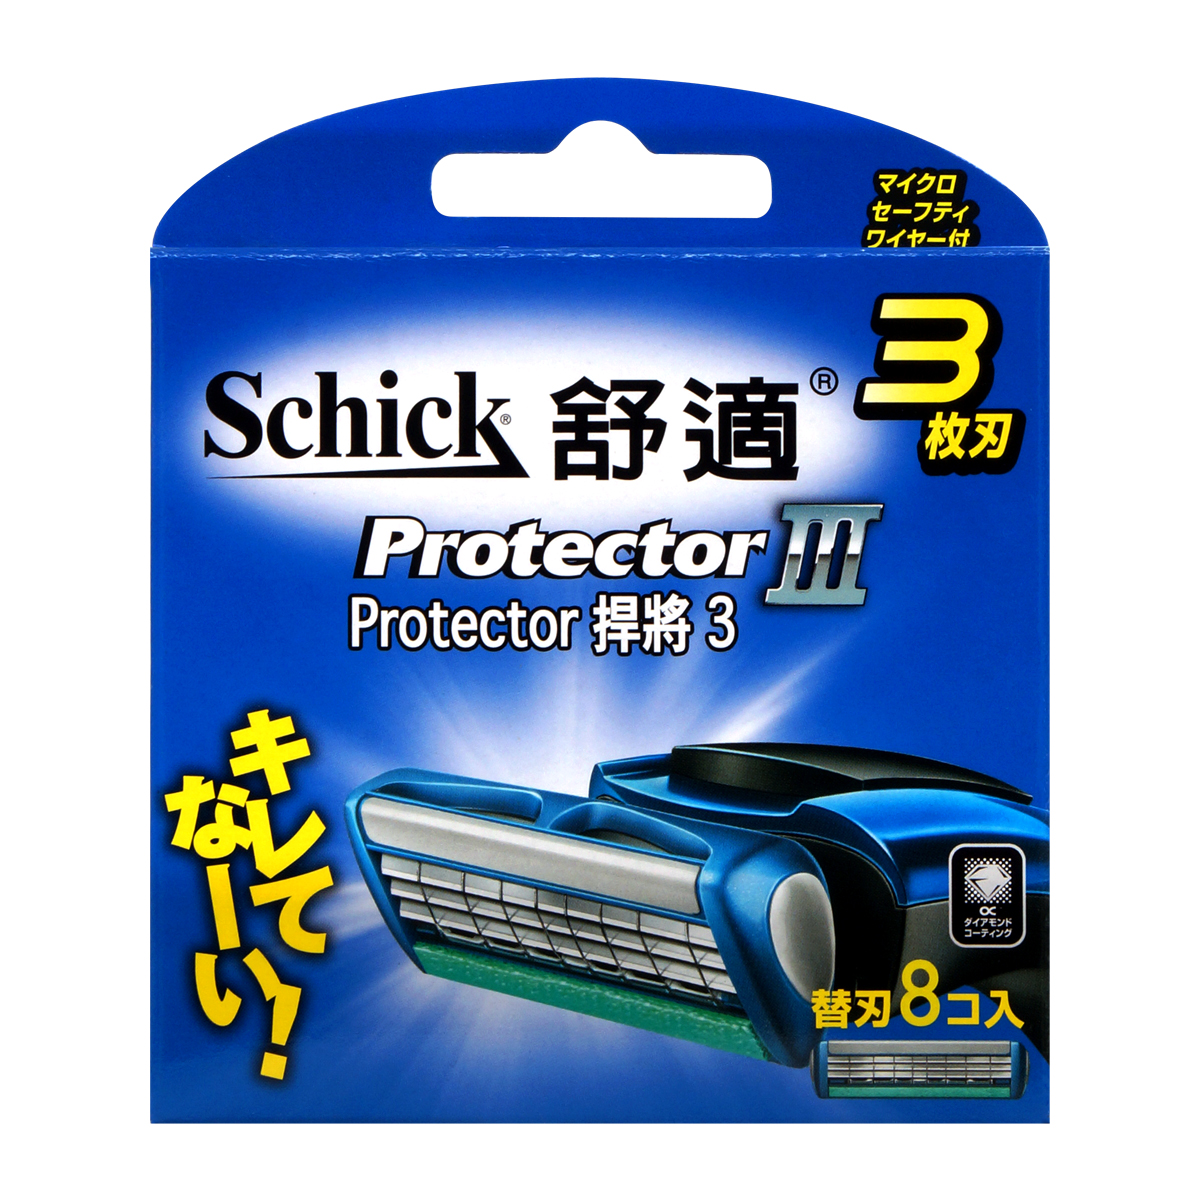 Schick 舒適 Protecter3 捍將 3  剃鬚刀補充刀片 8 片-p_2